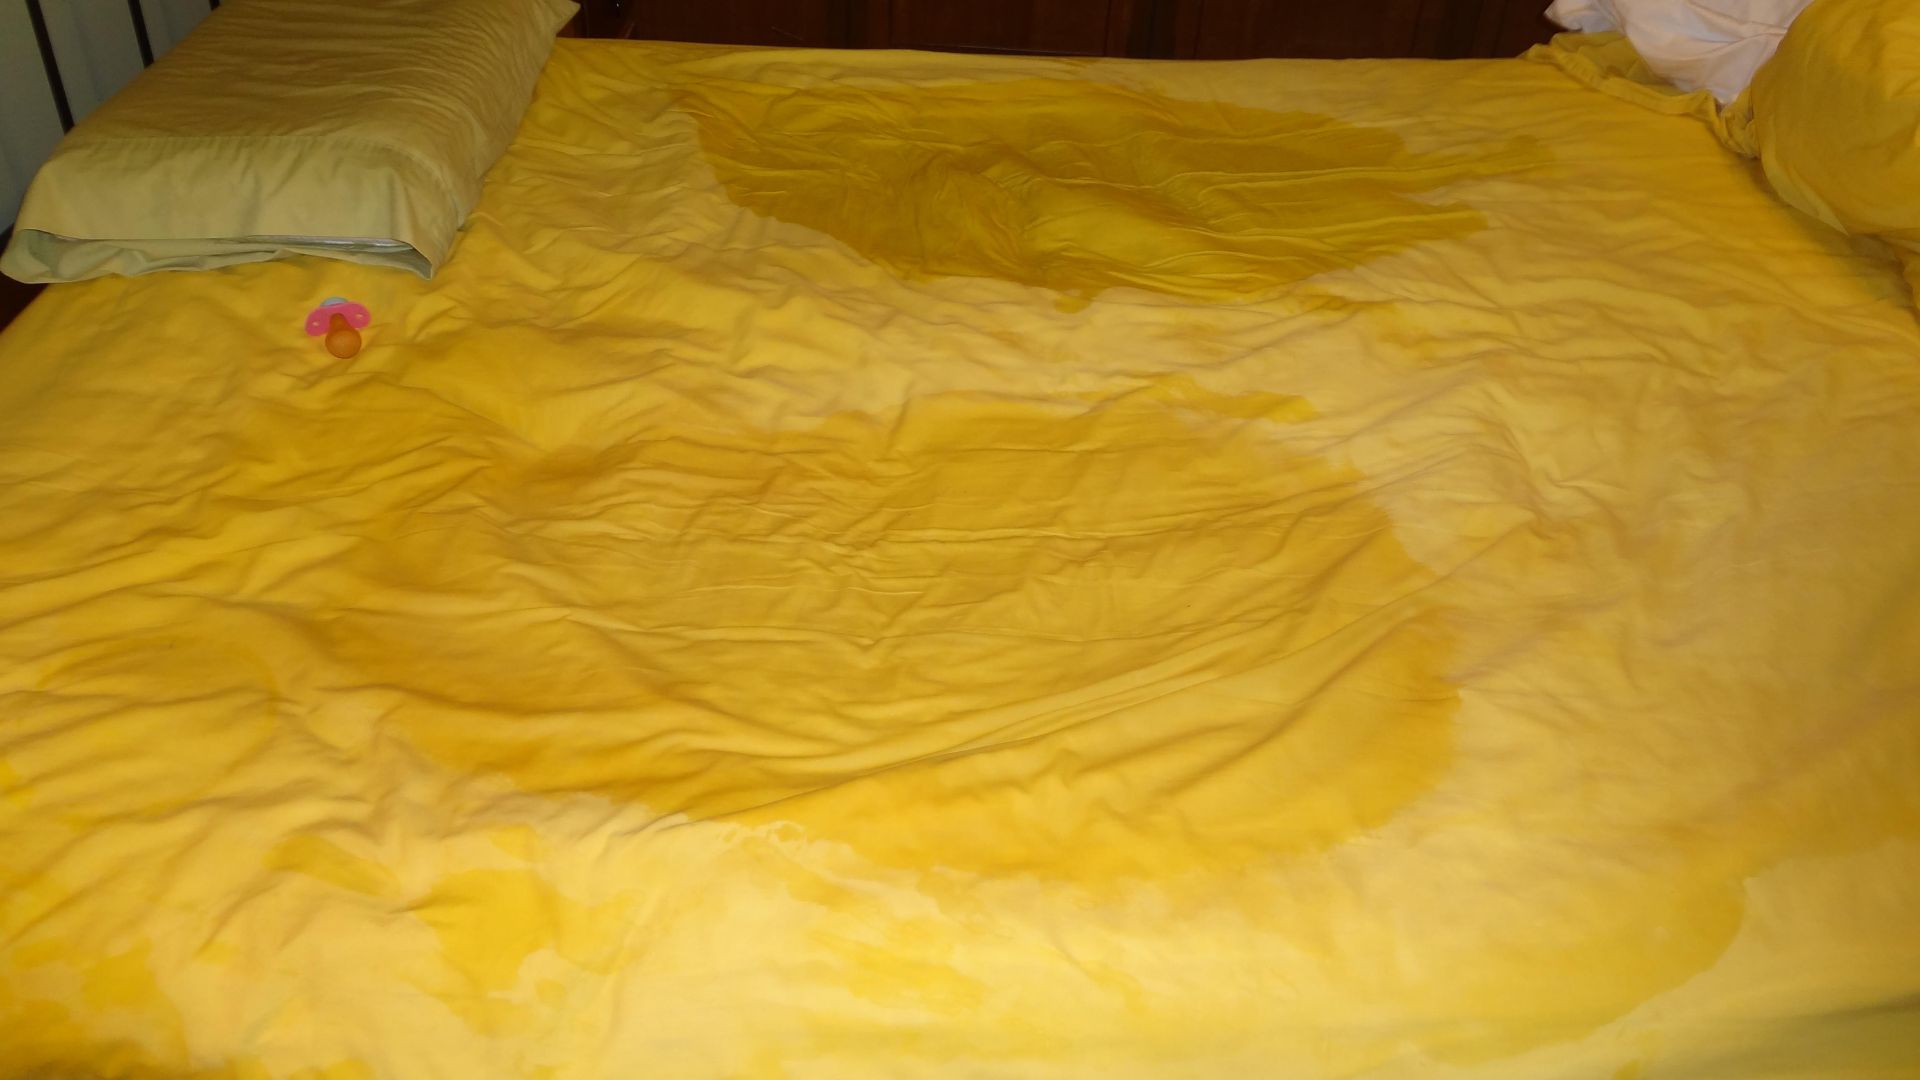 Yellow Wet Bed Sheet